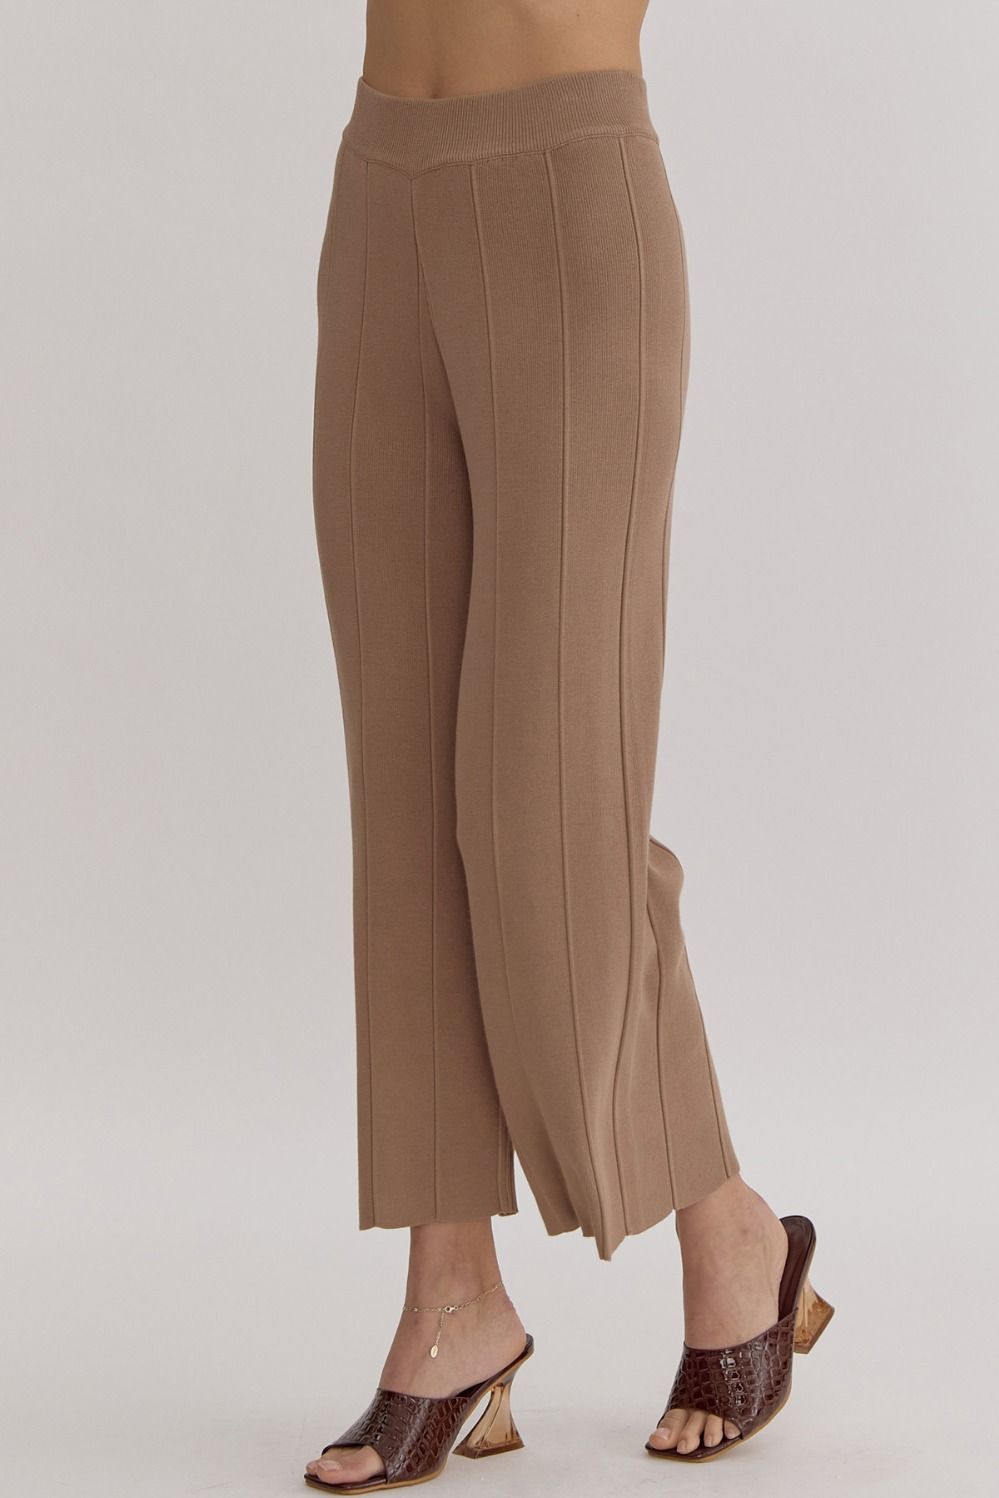 ENTRO INC Women's Pants MOCHA / S Ribbed High Waisted Wide Leg Pants || David's Clothing P24220